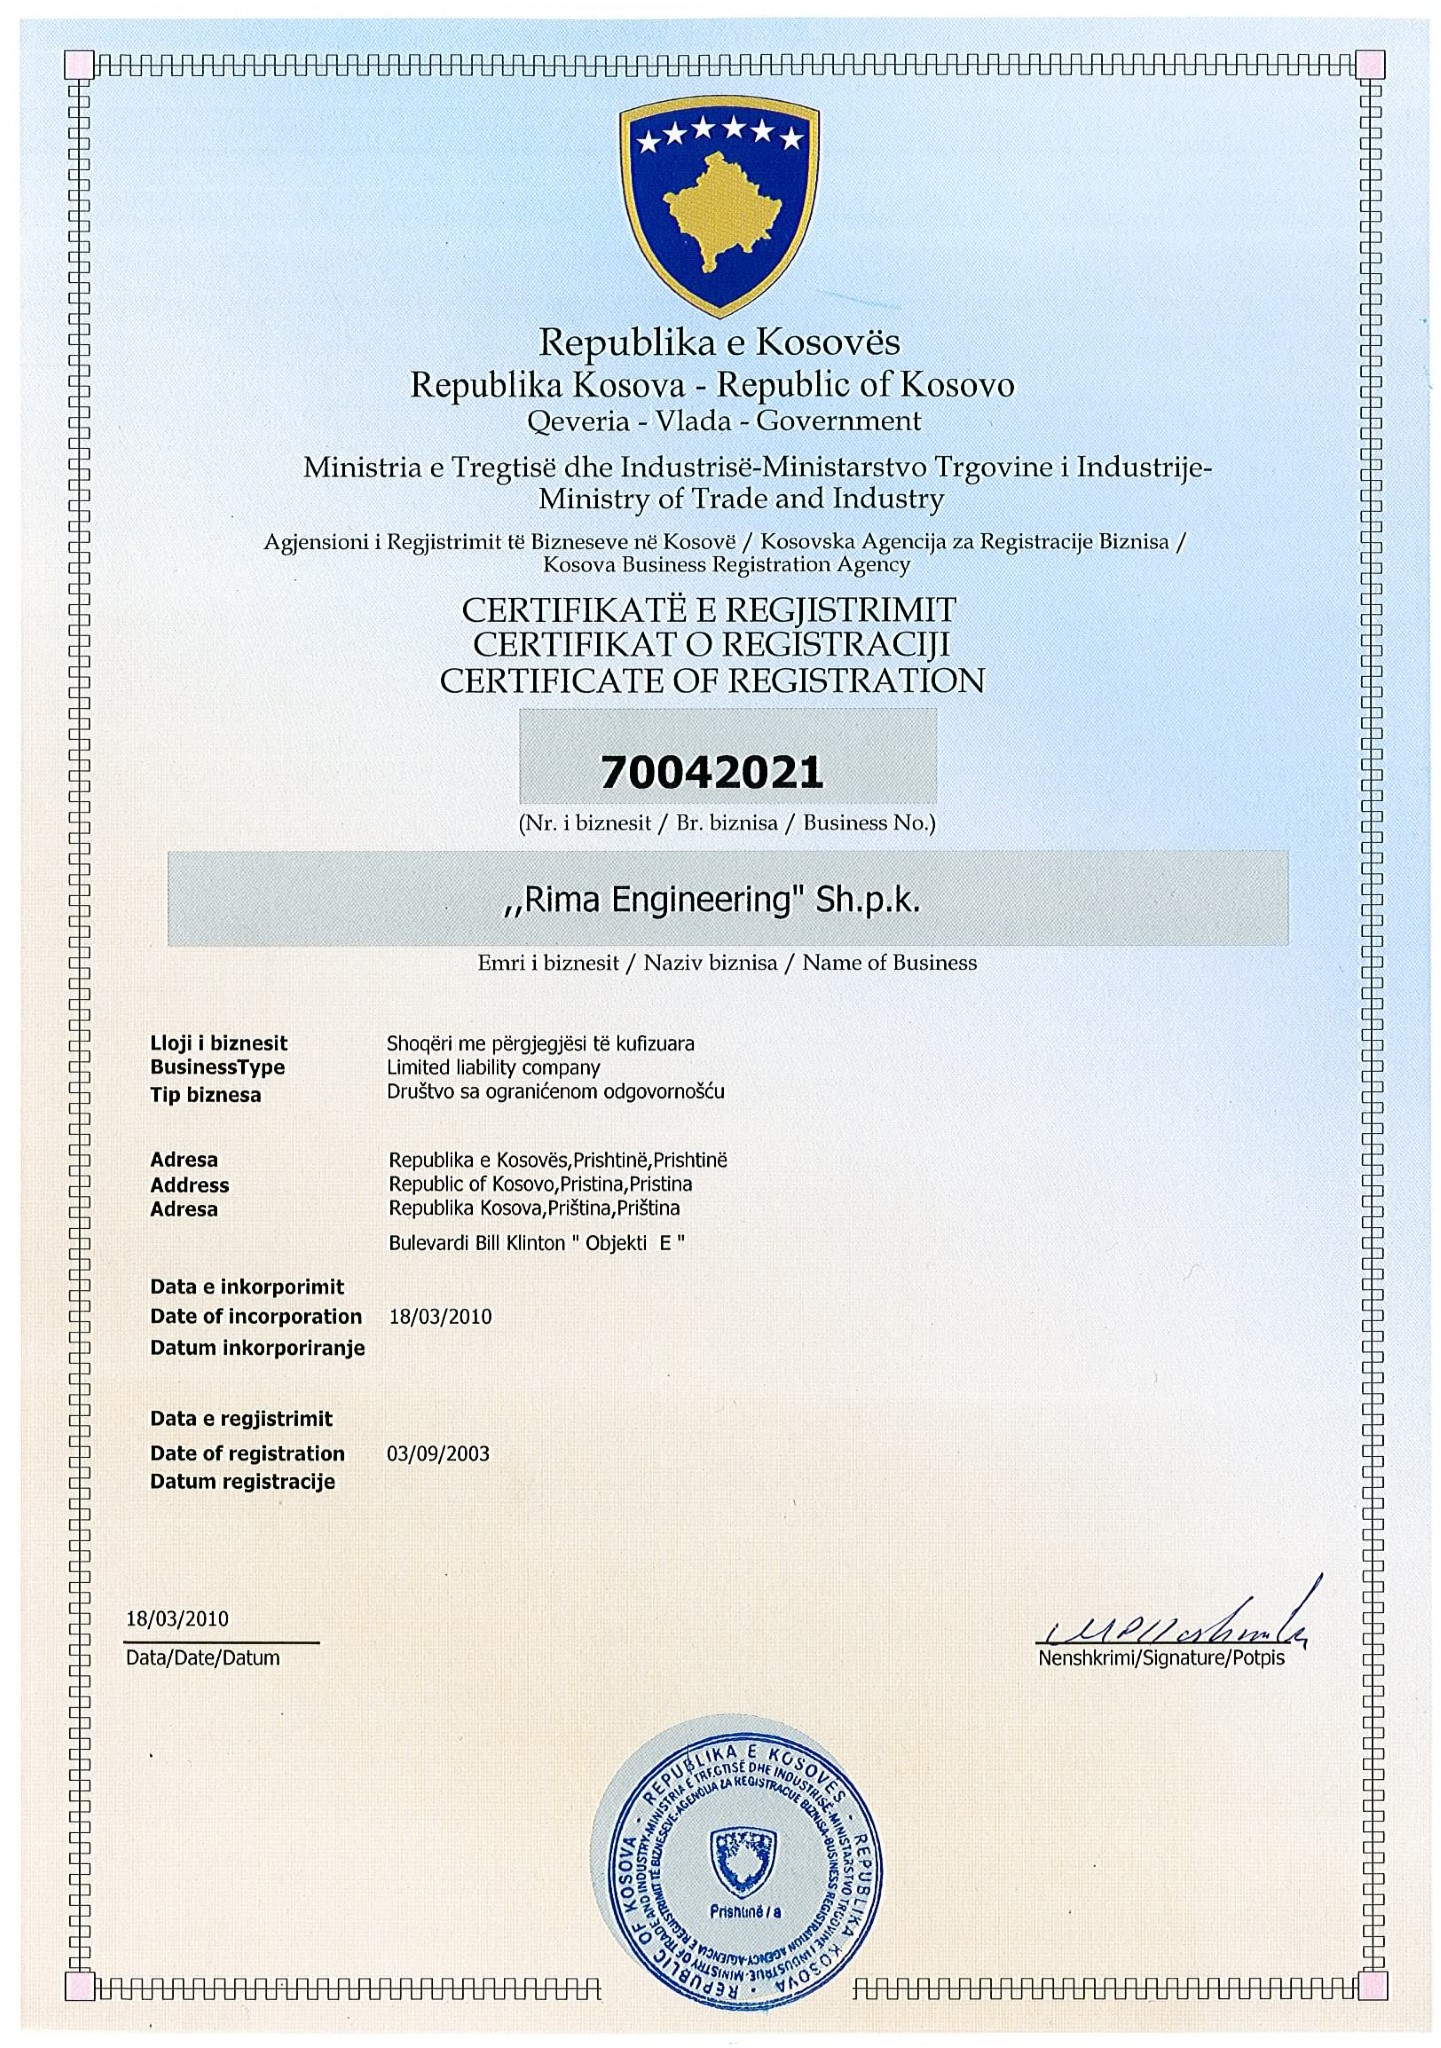 Certificate of Registration in Kosovo